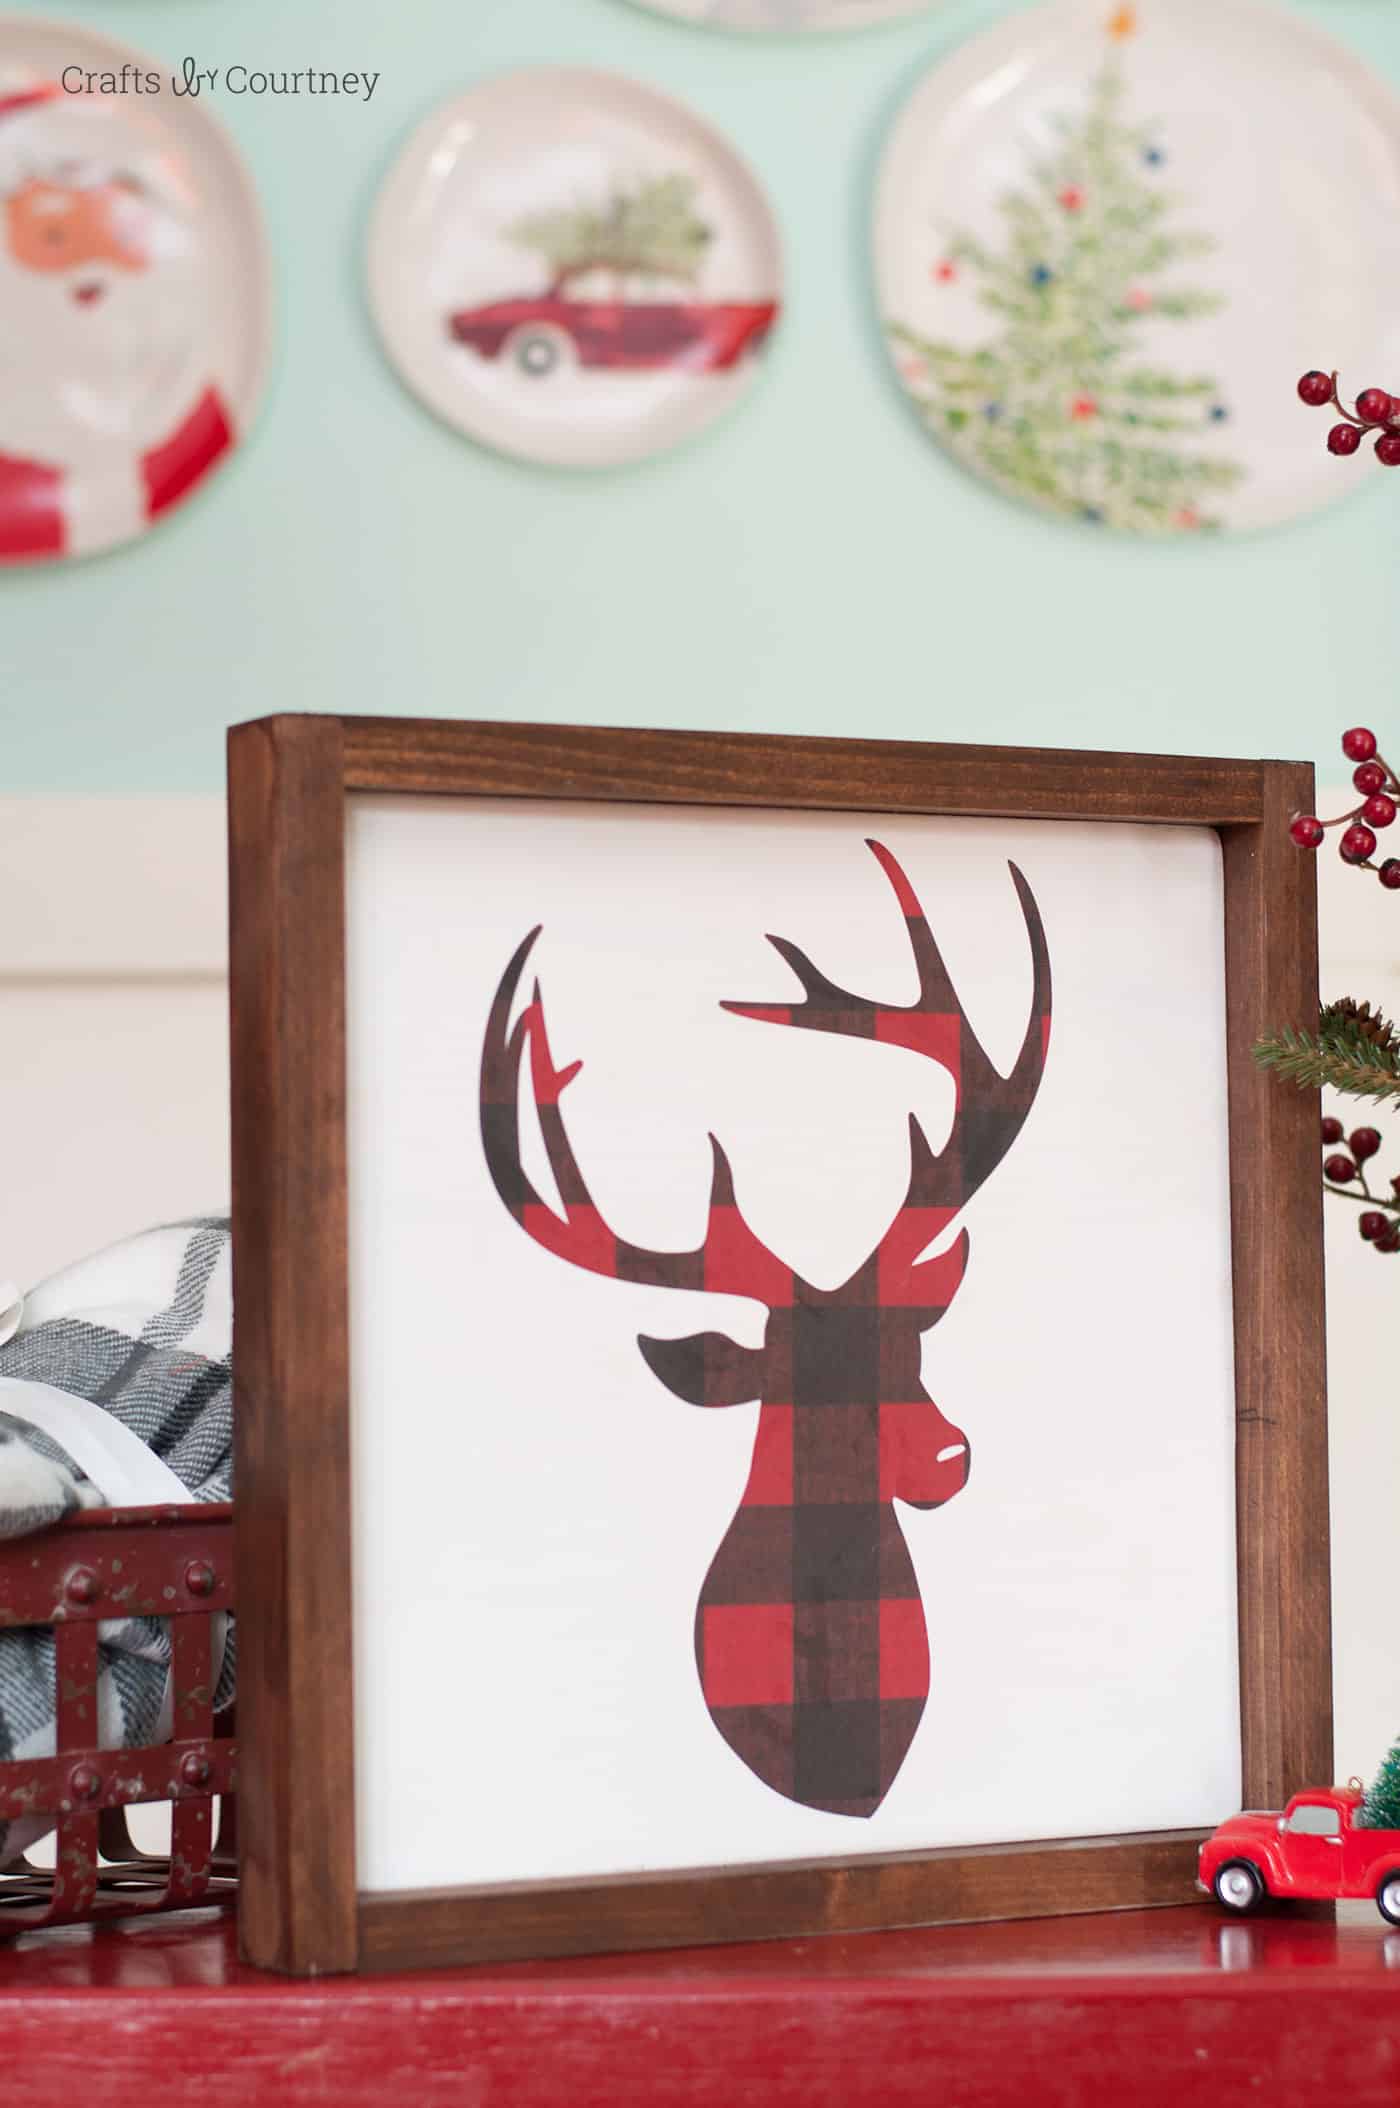 Handmade DIY Christmas sign featuring a buffalo plaid deer